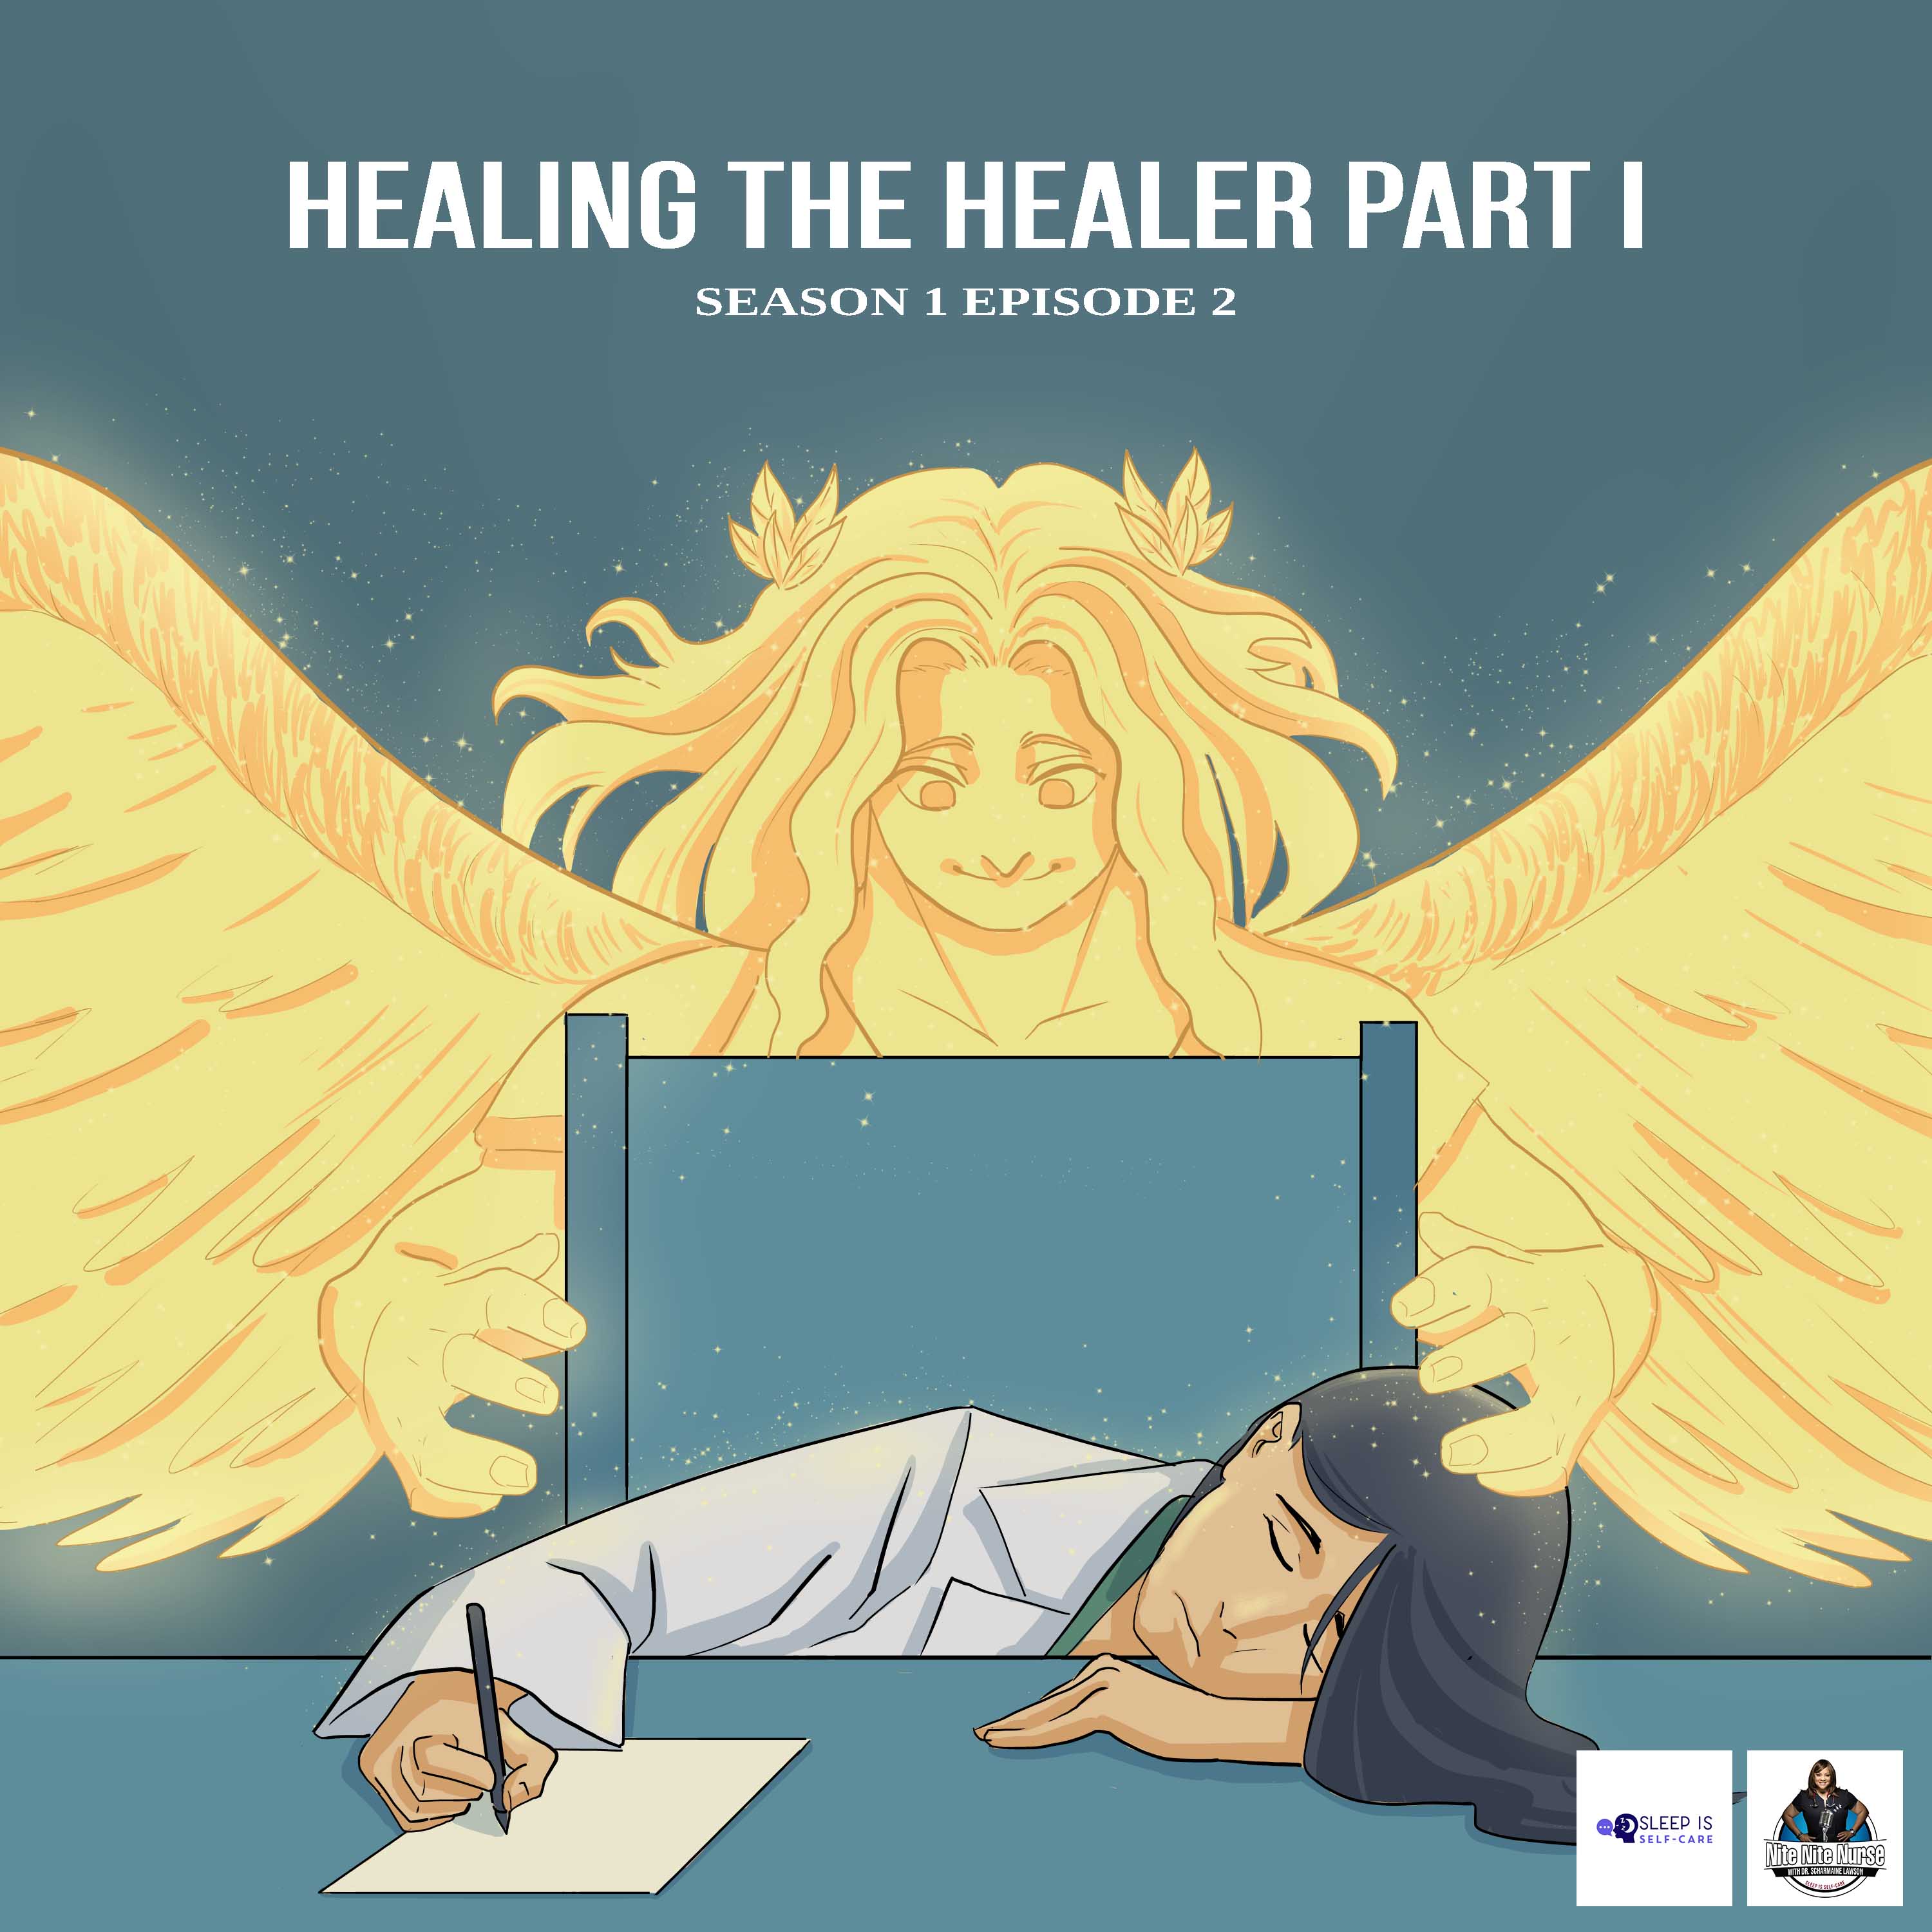 S1 Ep 2. Healing The Healer Part I